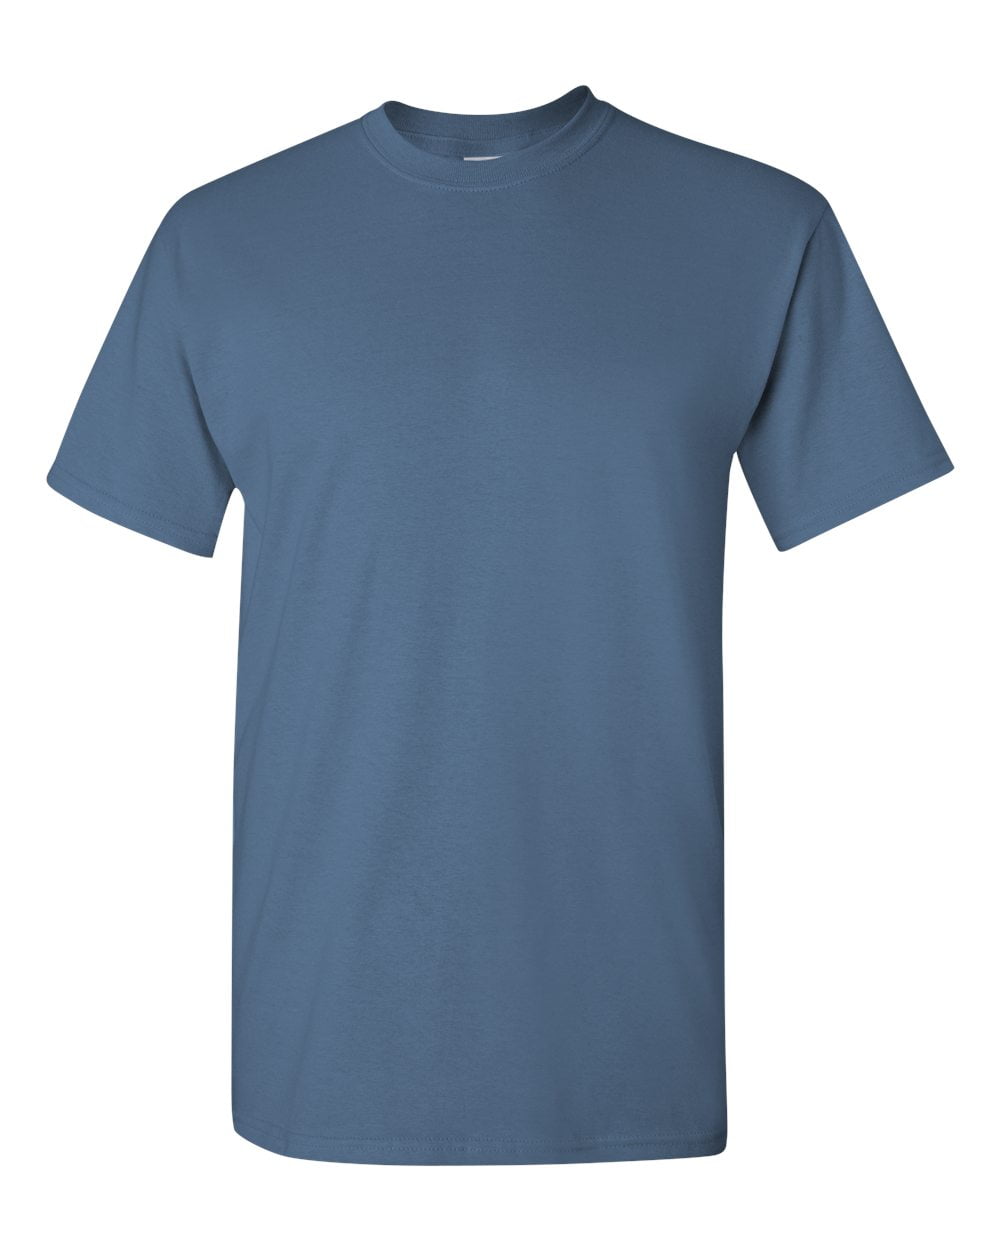 Gildan - Gildan 5000 Heavy Cotton Men's T-Shirt - Indigo Blue - 4X ...